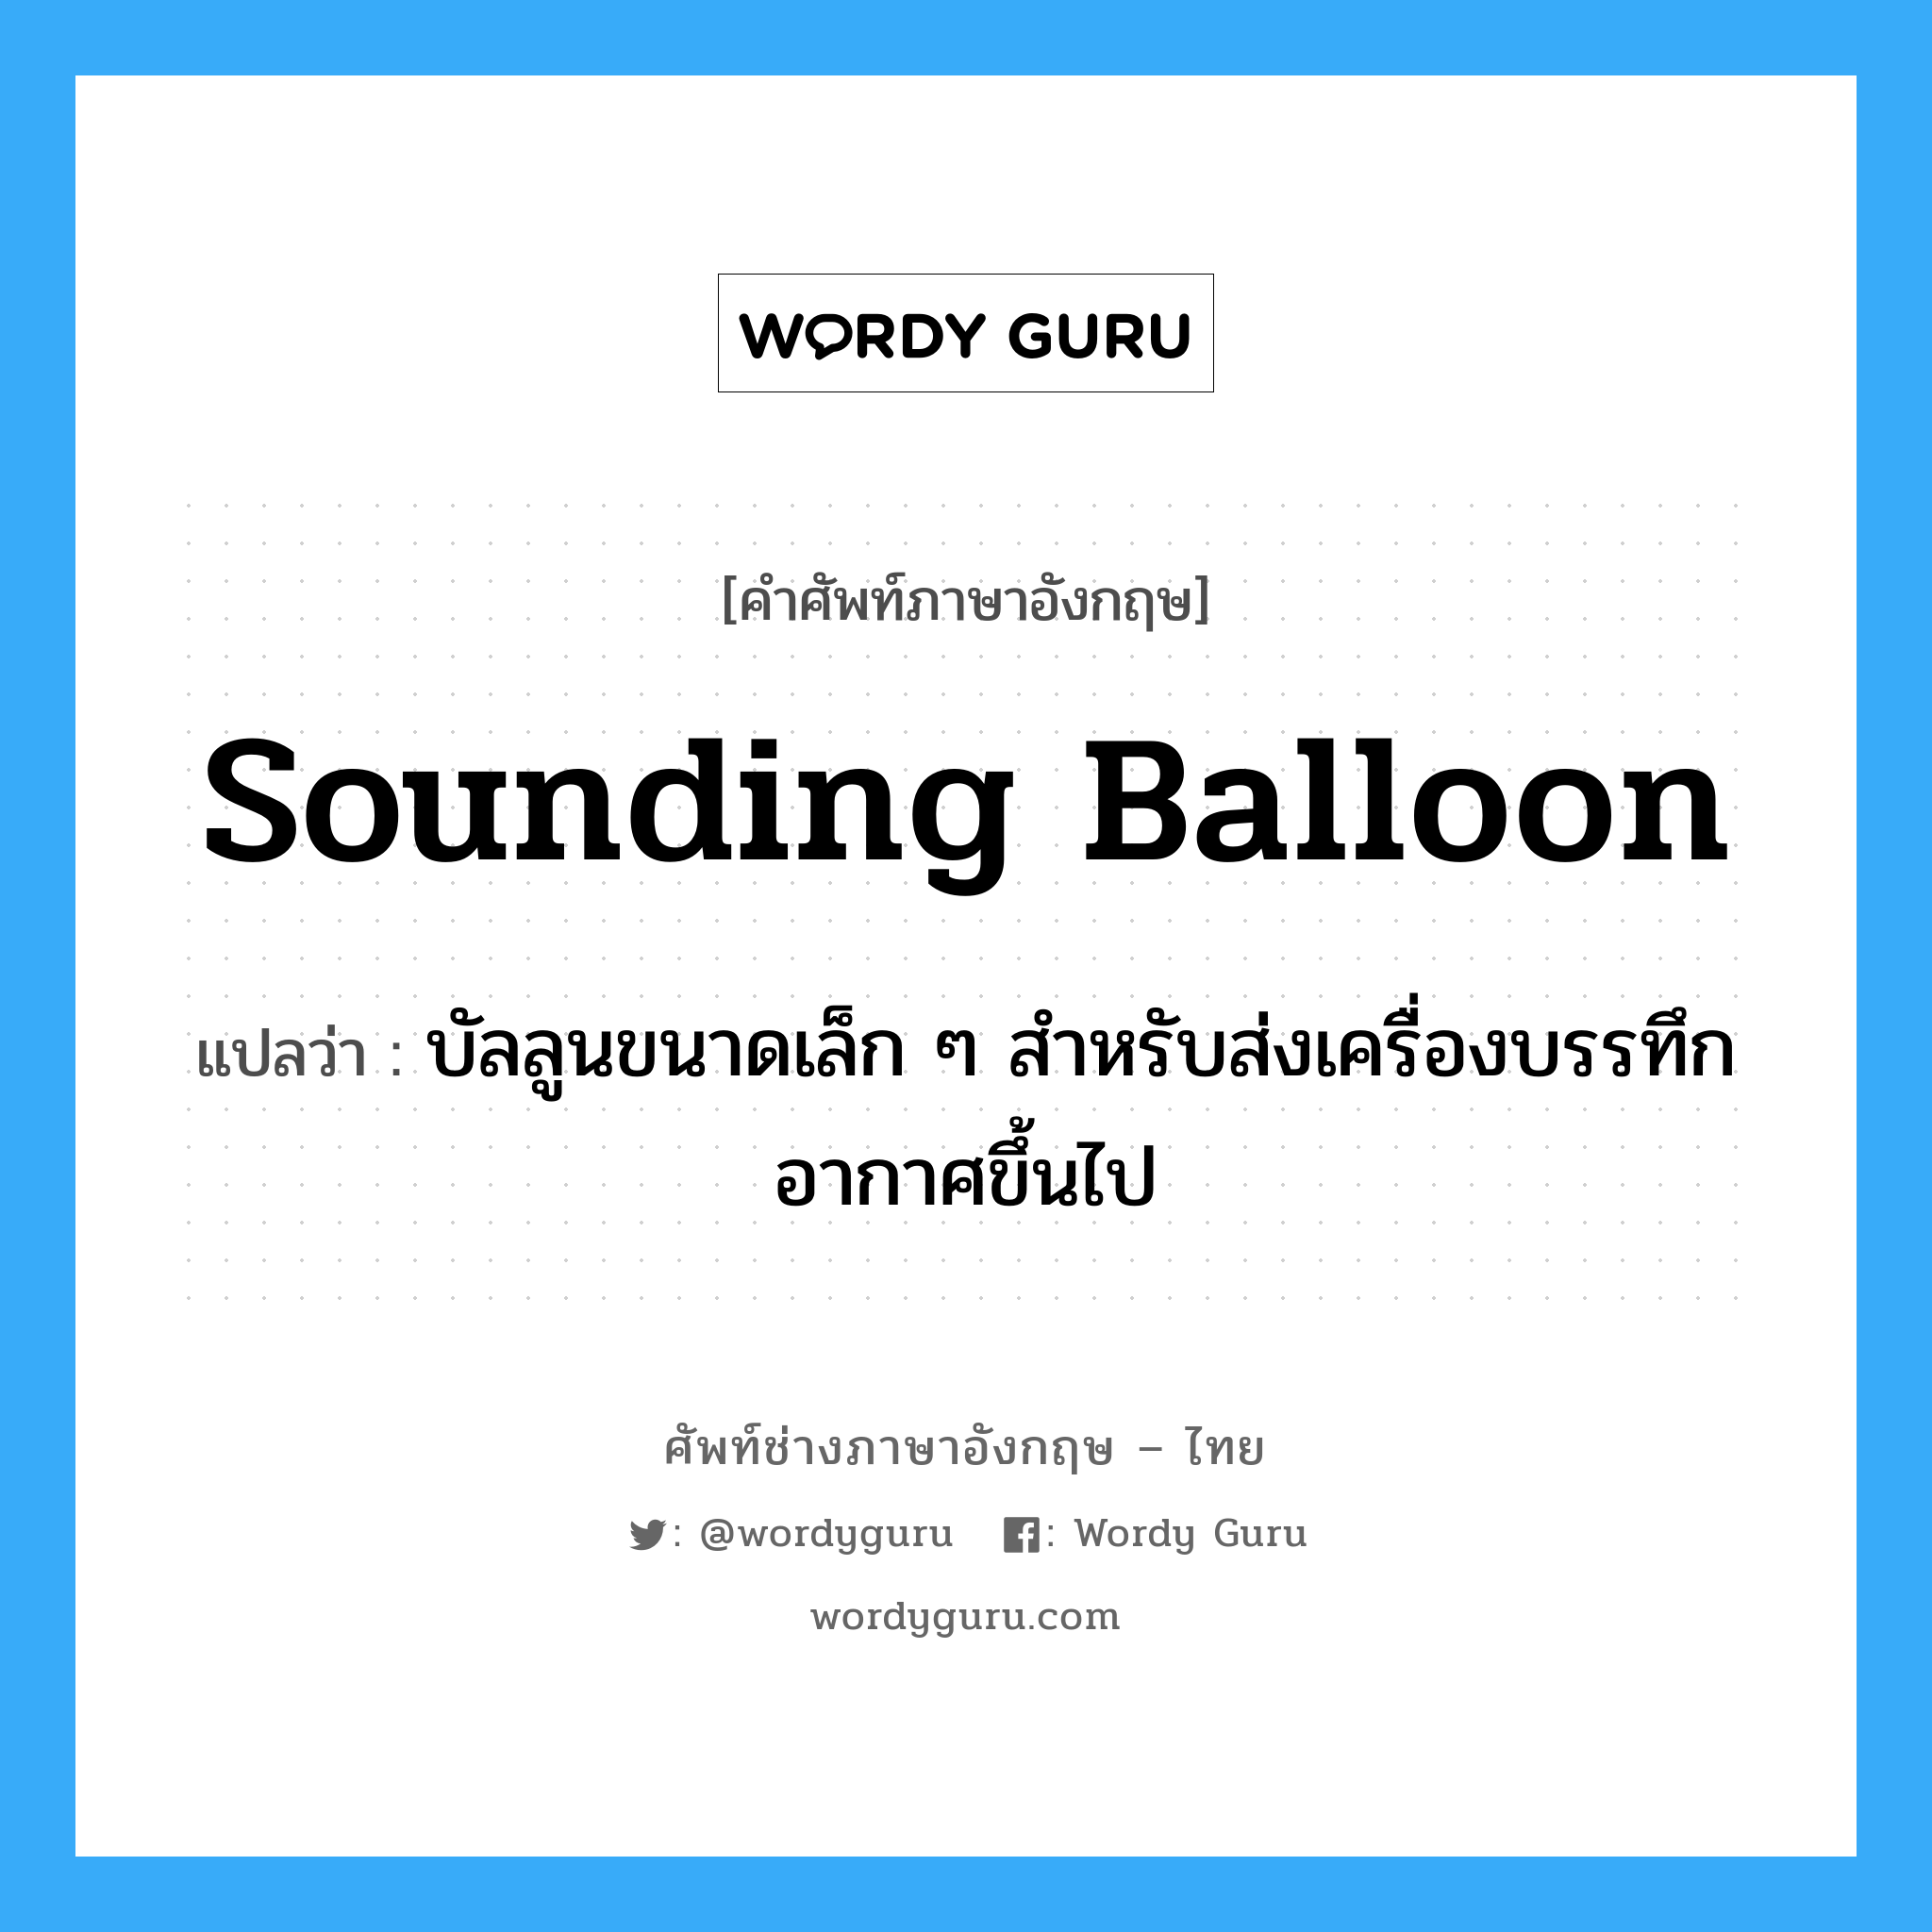 sounding balloon แปลว่า?, คำศัพท์ช่างภาษาอังกฤษ - ไทย sounding balloon คำศัพท์ภาษาอังกฤษ sounding balloon แปลว่า บัลลูนขนาดเล็ก ๆ สำหรับส่งเครื่องบรรทึกอากาศขึ้นไป